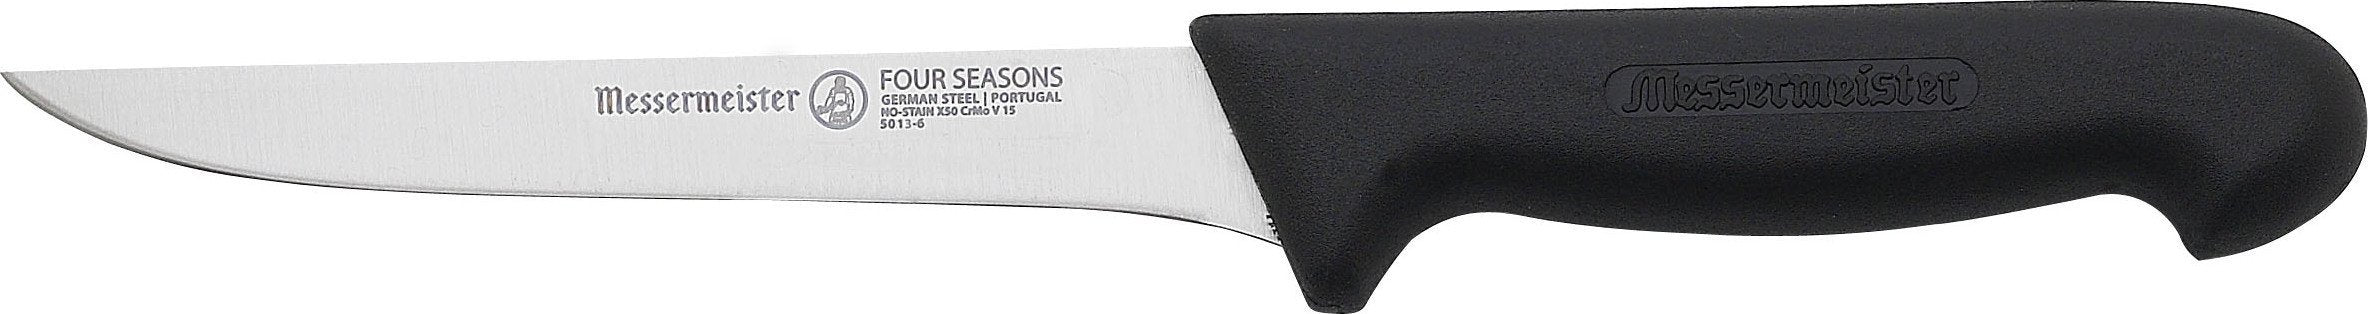 Messermeister Four Seasons Curved Semi-Flexible 6 Boning Knife